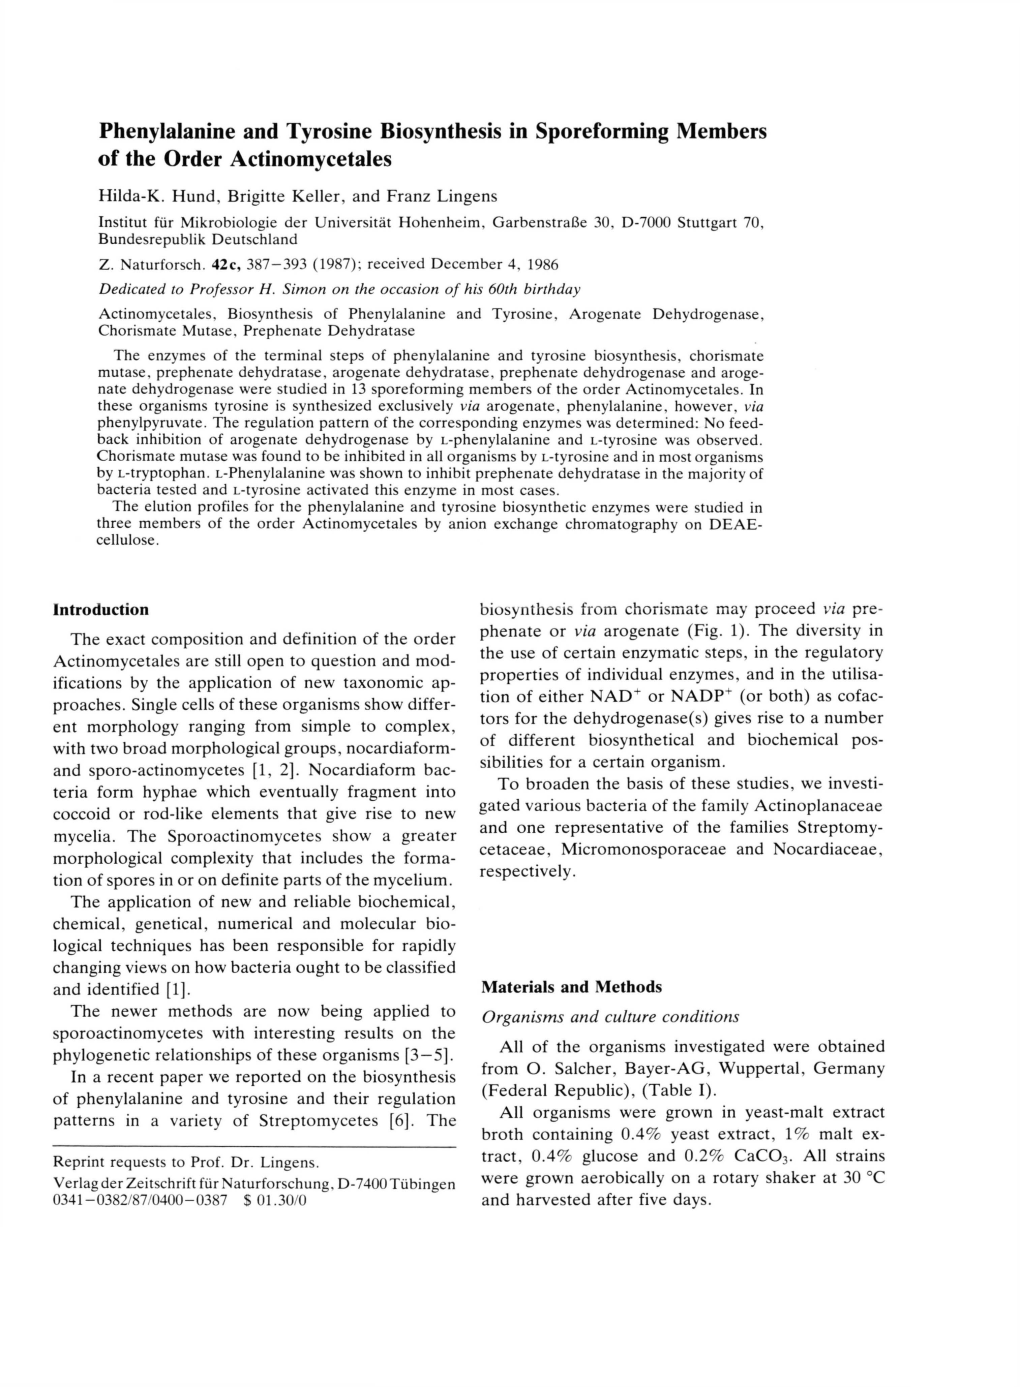 Phenylalanine and Tyrosine Biosynthesis in Sporeforming Members of the Order Actinomycetales